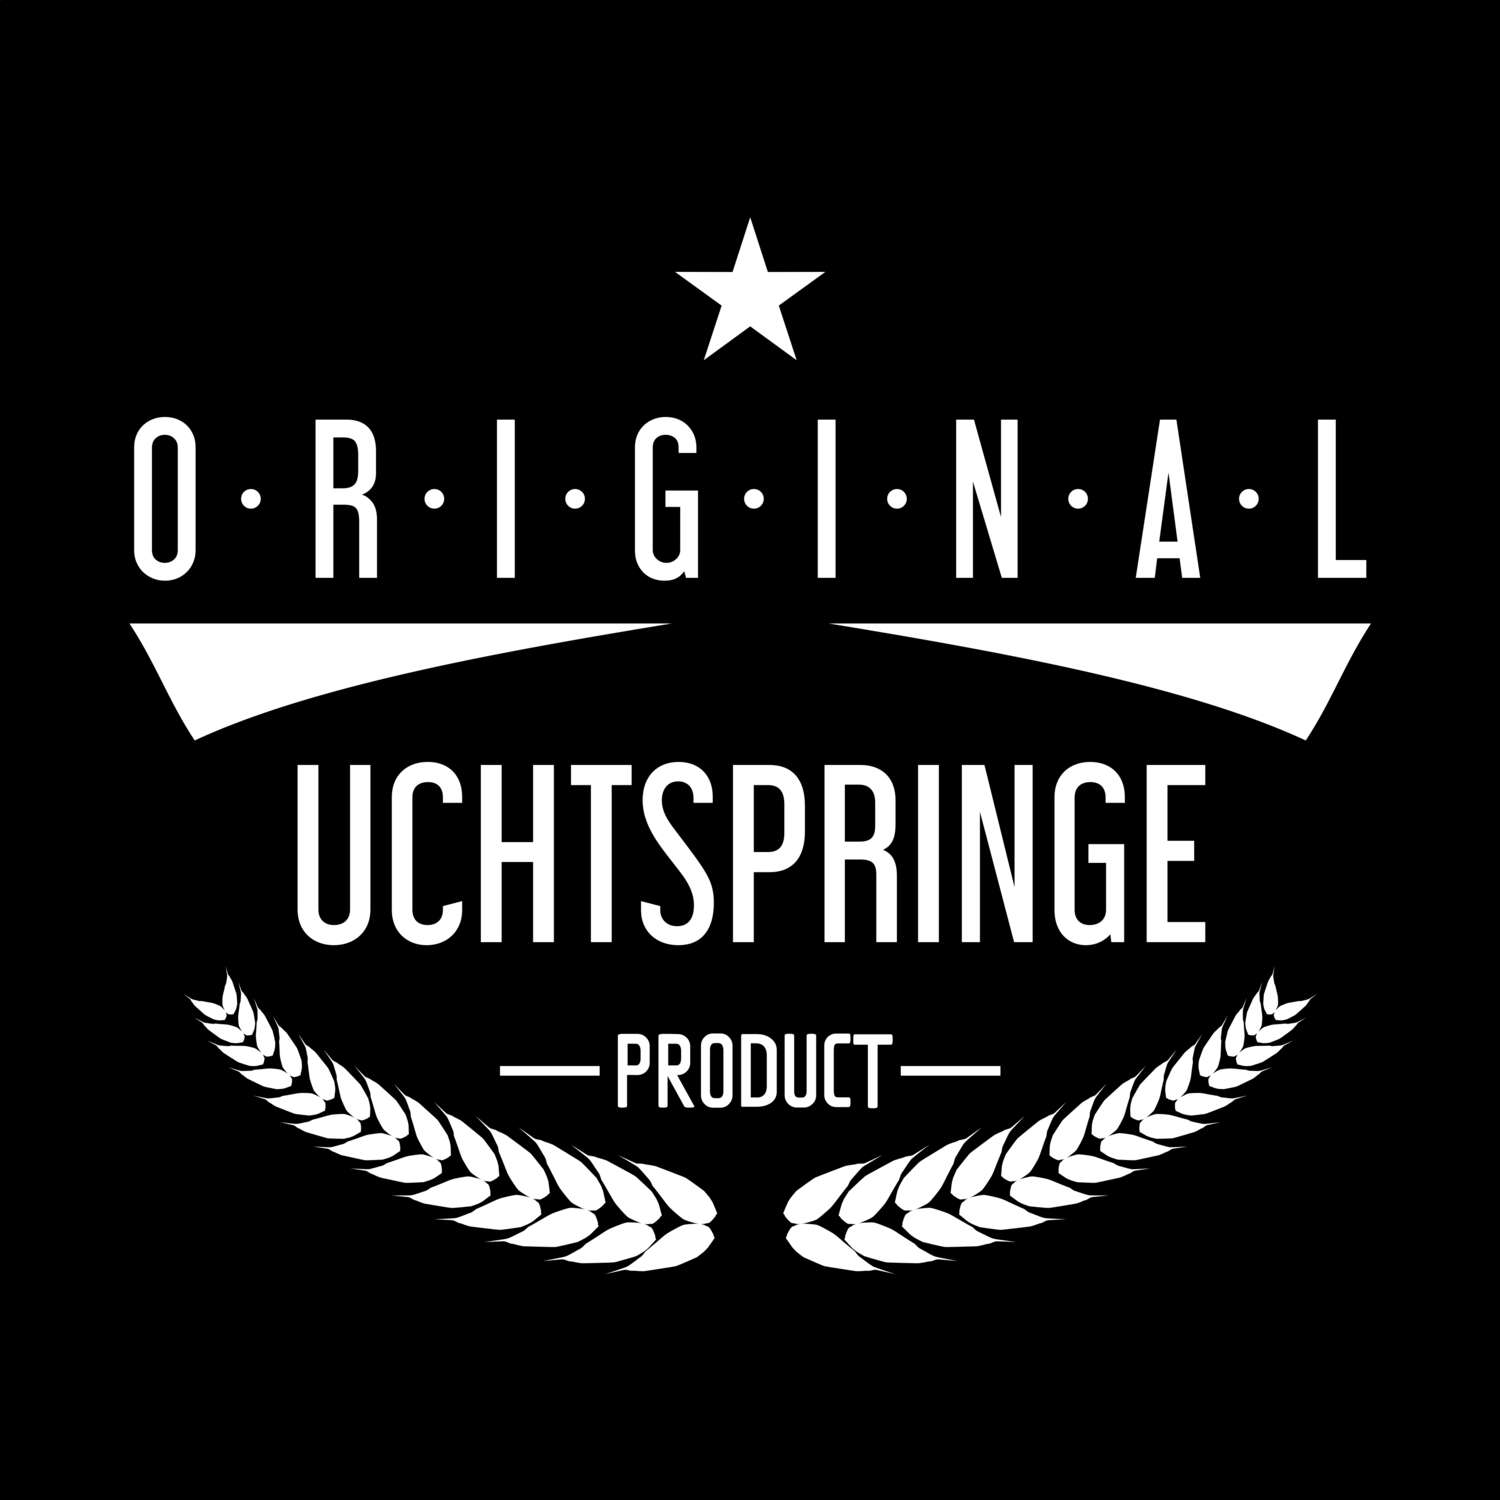 Uchtspringe T-Shirt »Original Product«